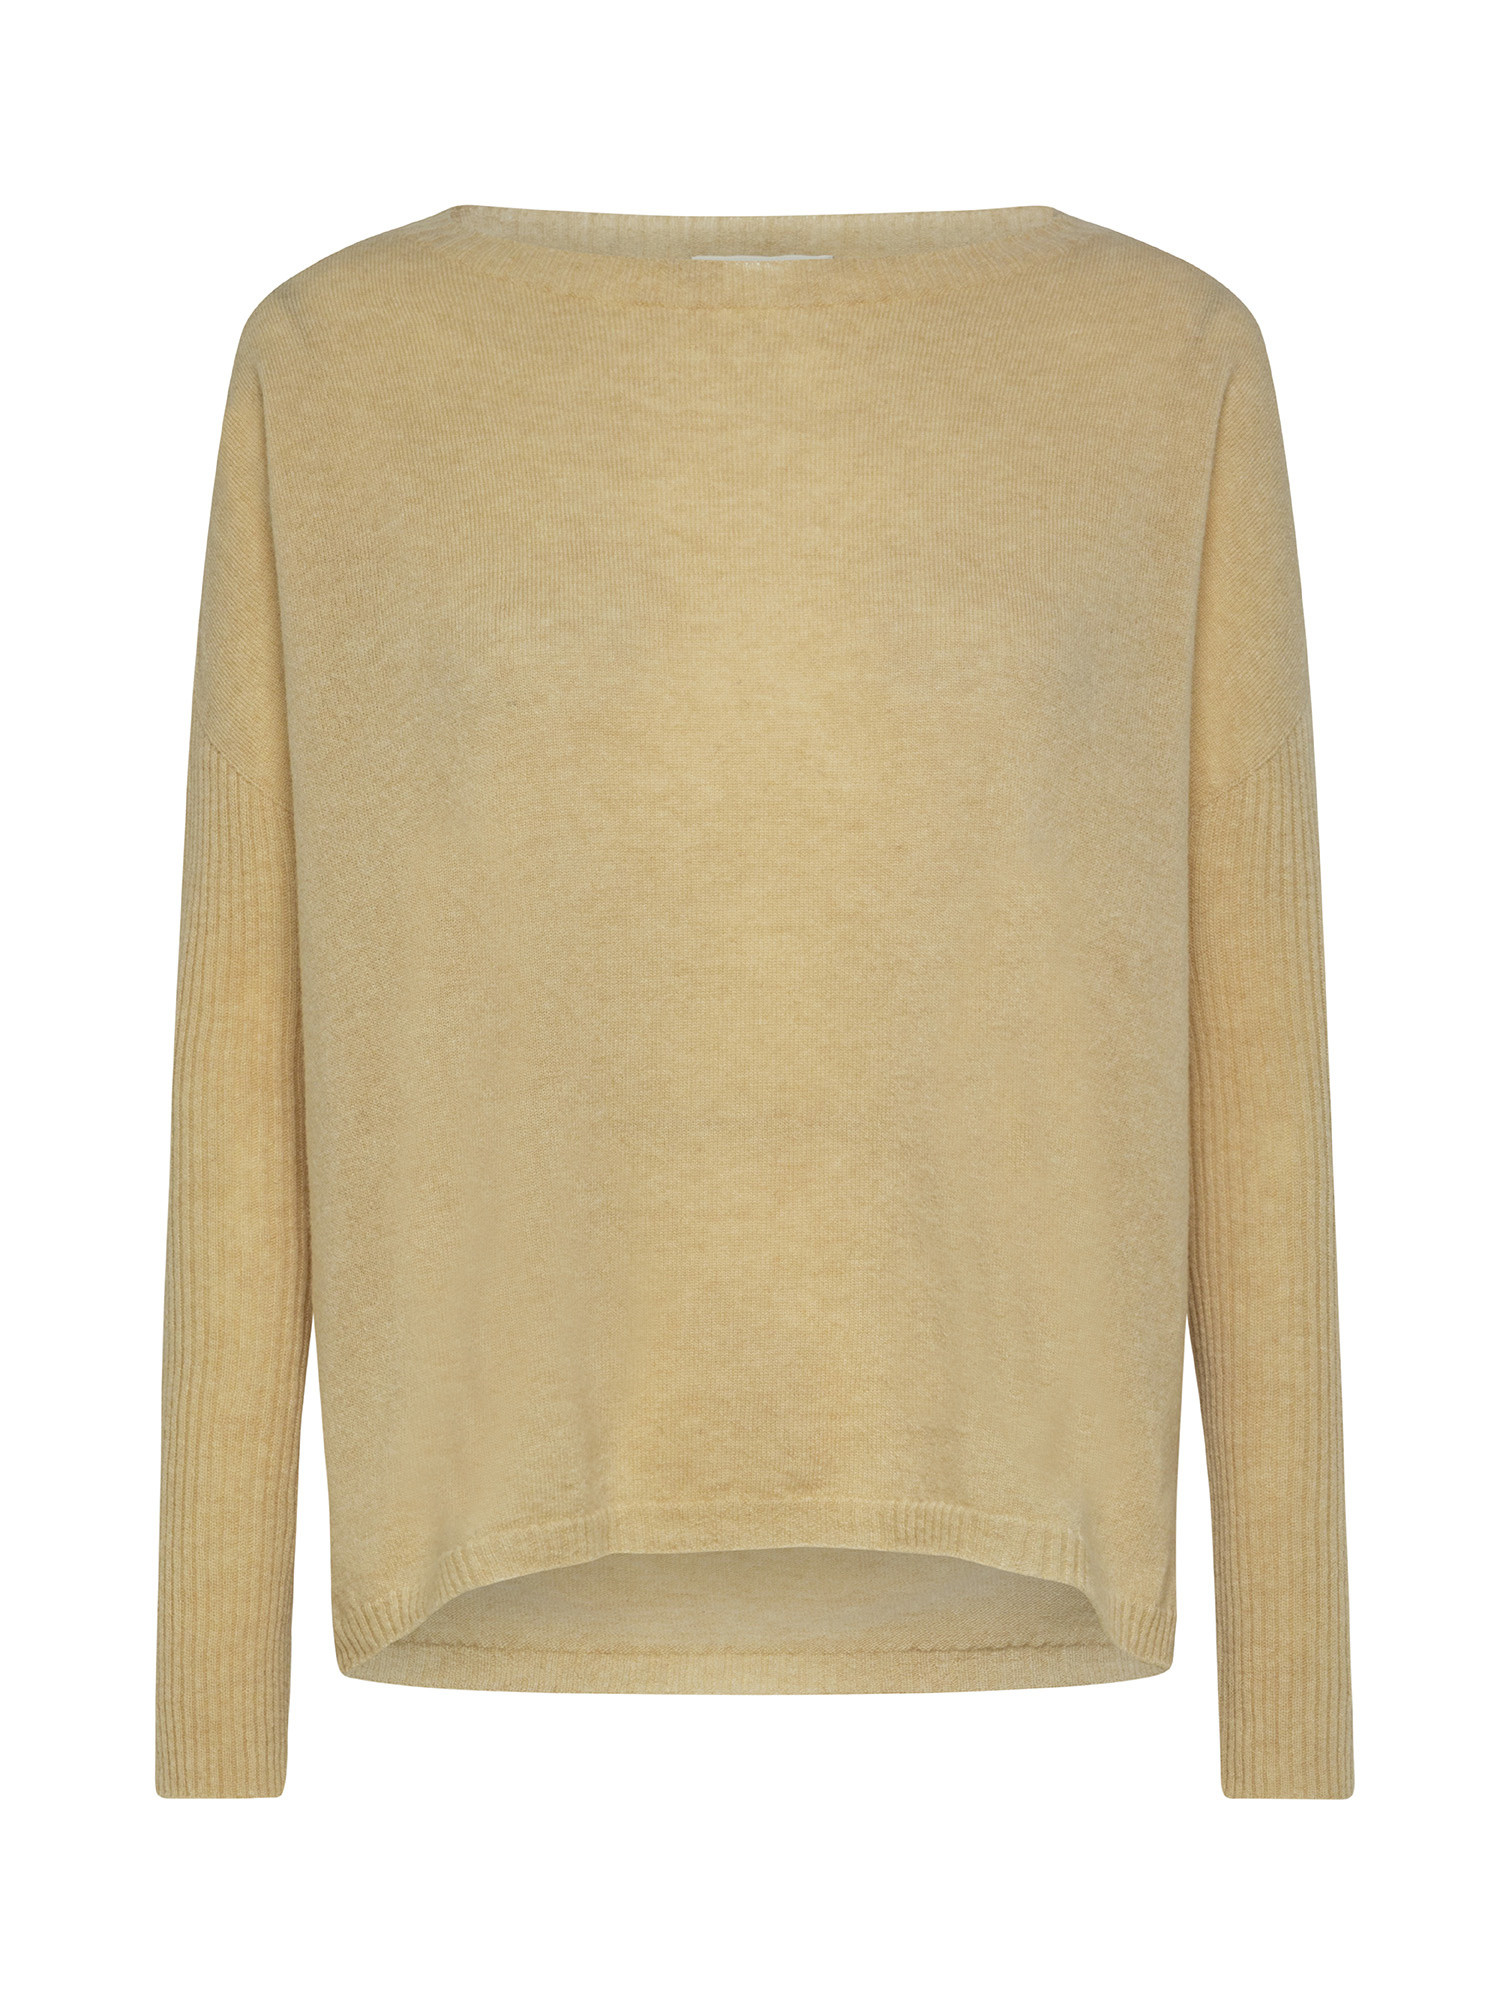 K Collection - Crewneck sweater, Beige, large image number 0